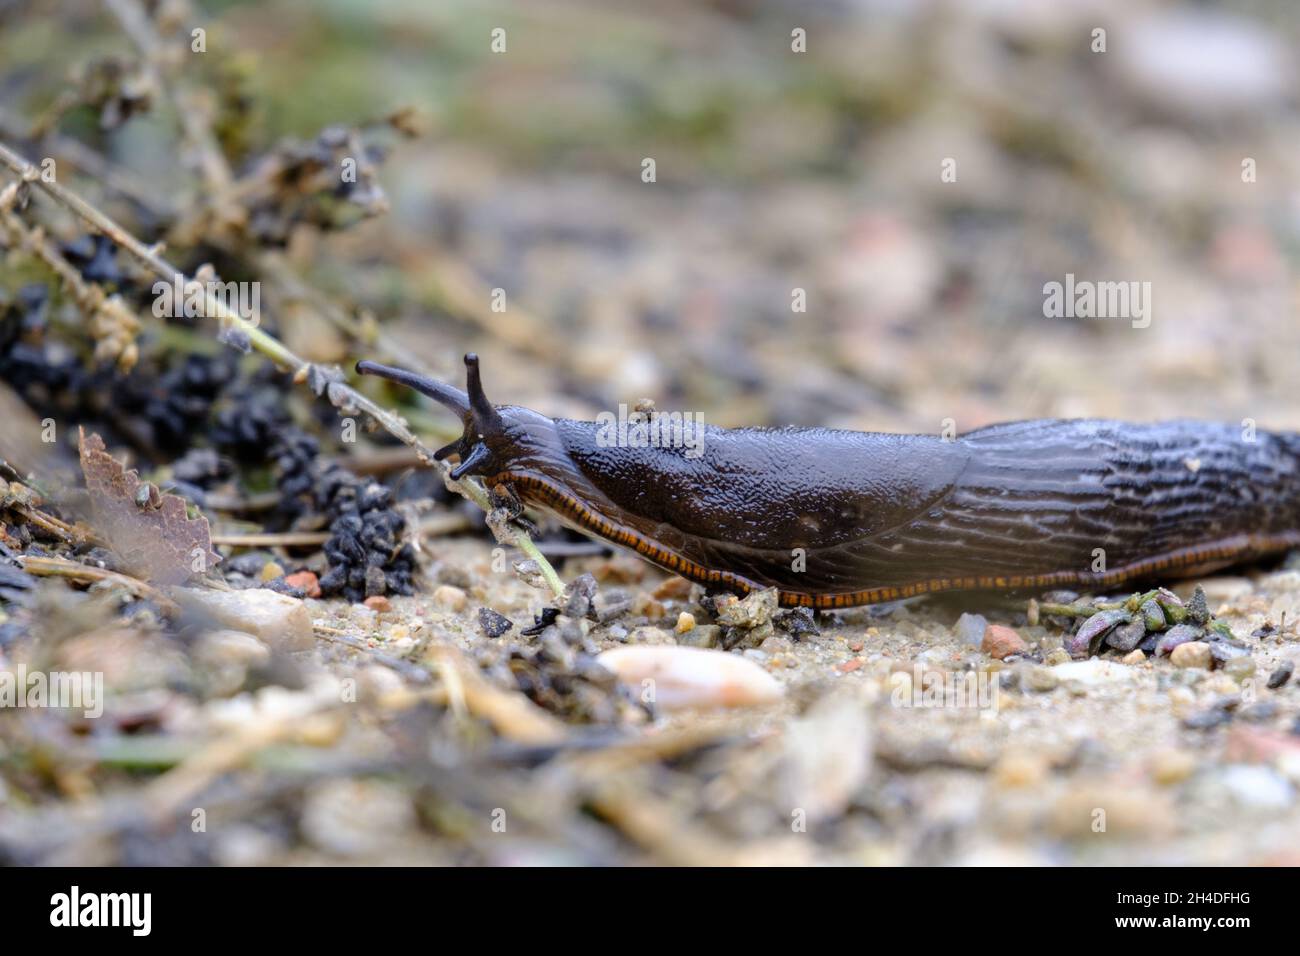 a slug is slowly advancing on the earthen floor Stock Photo